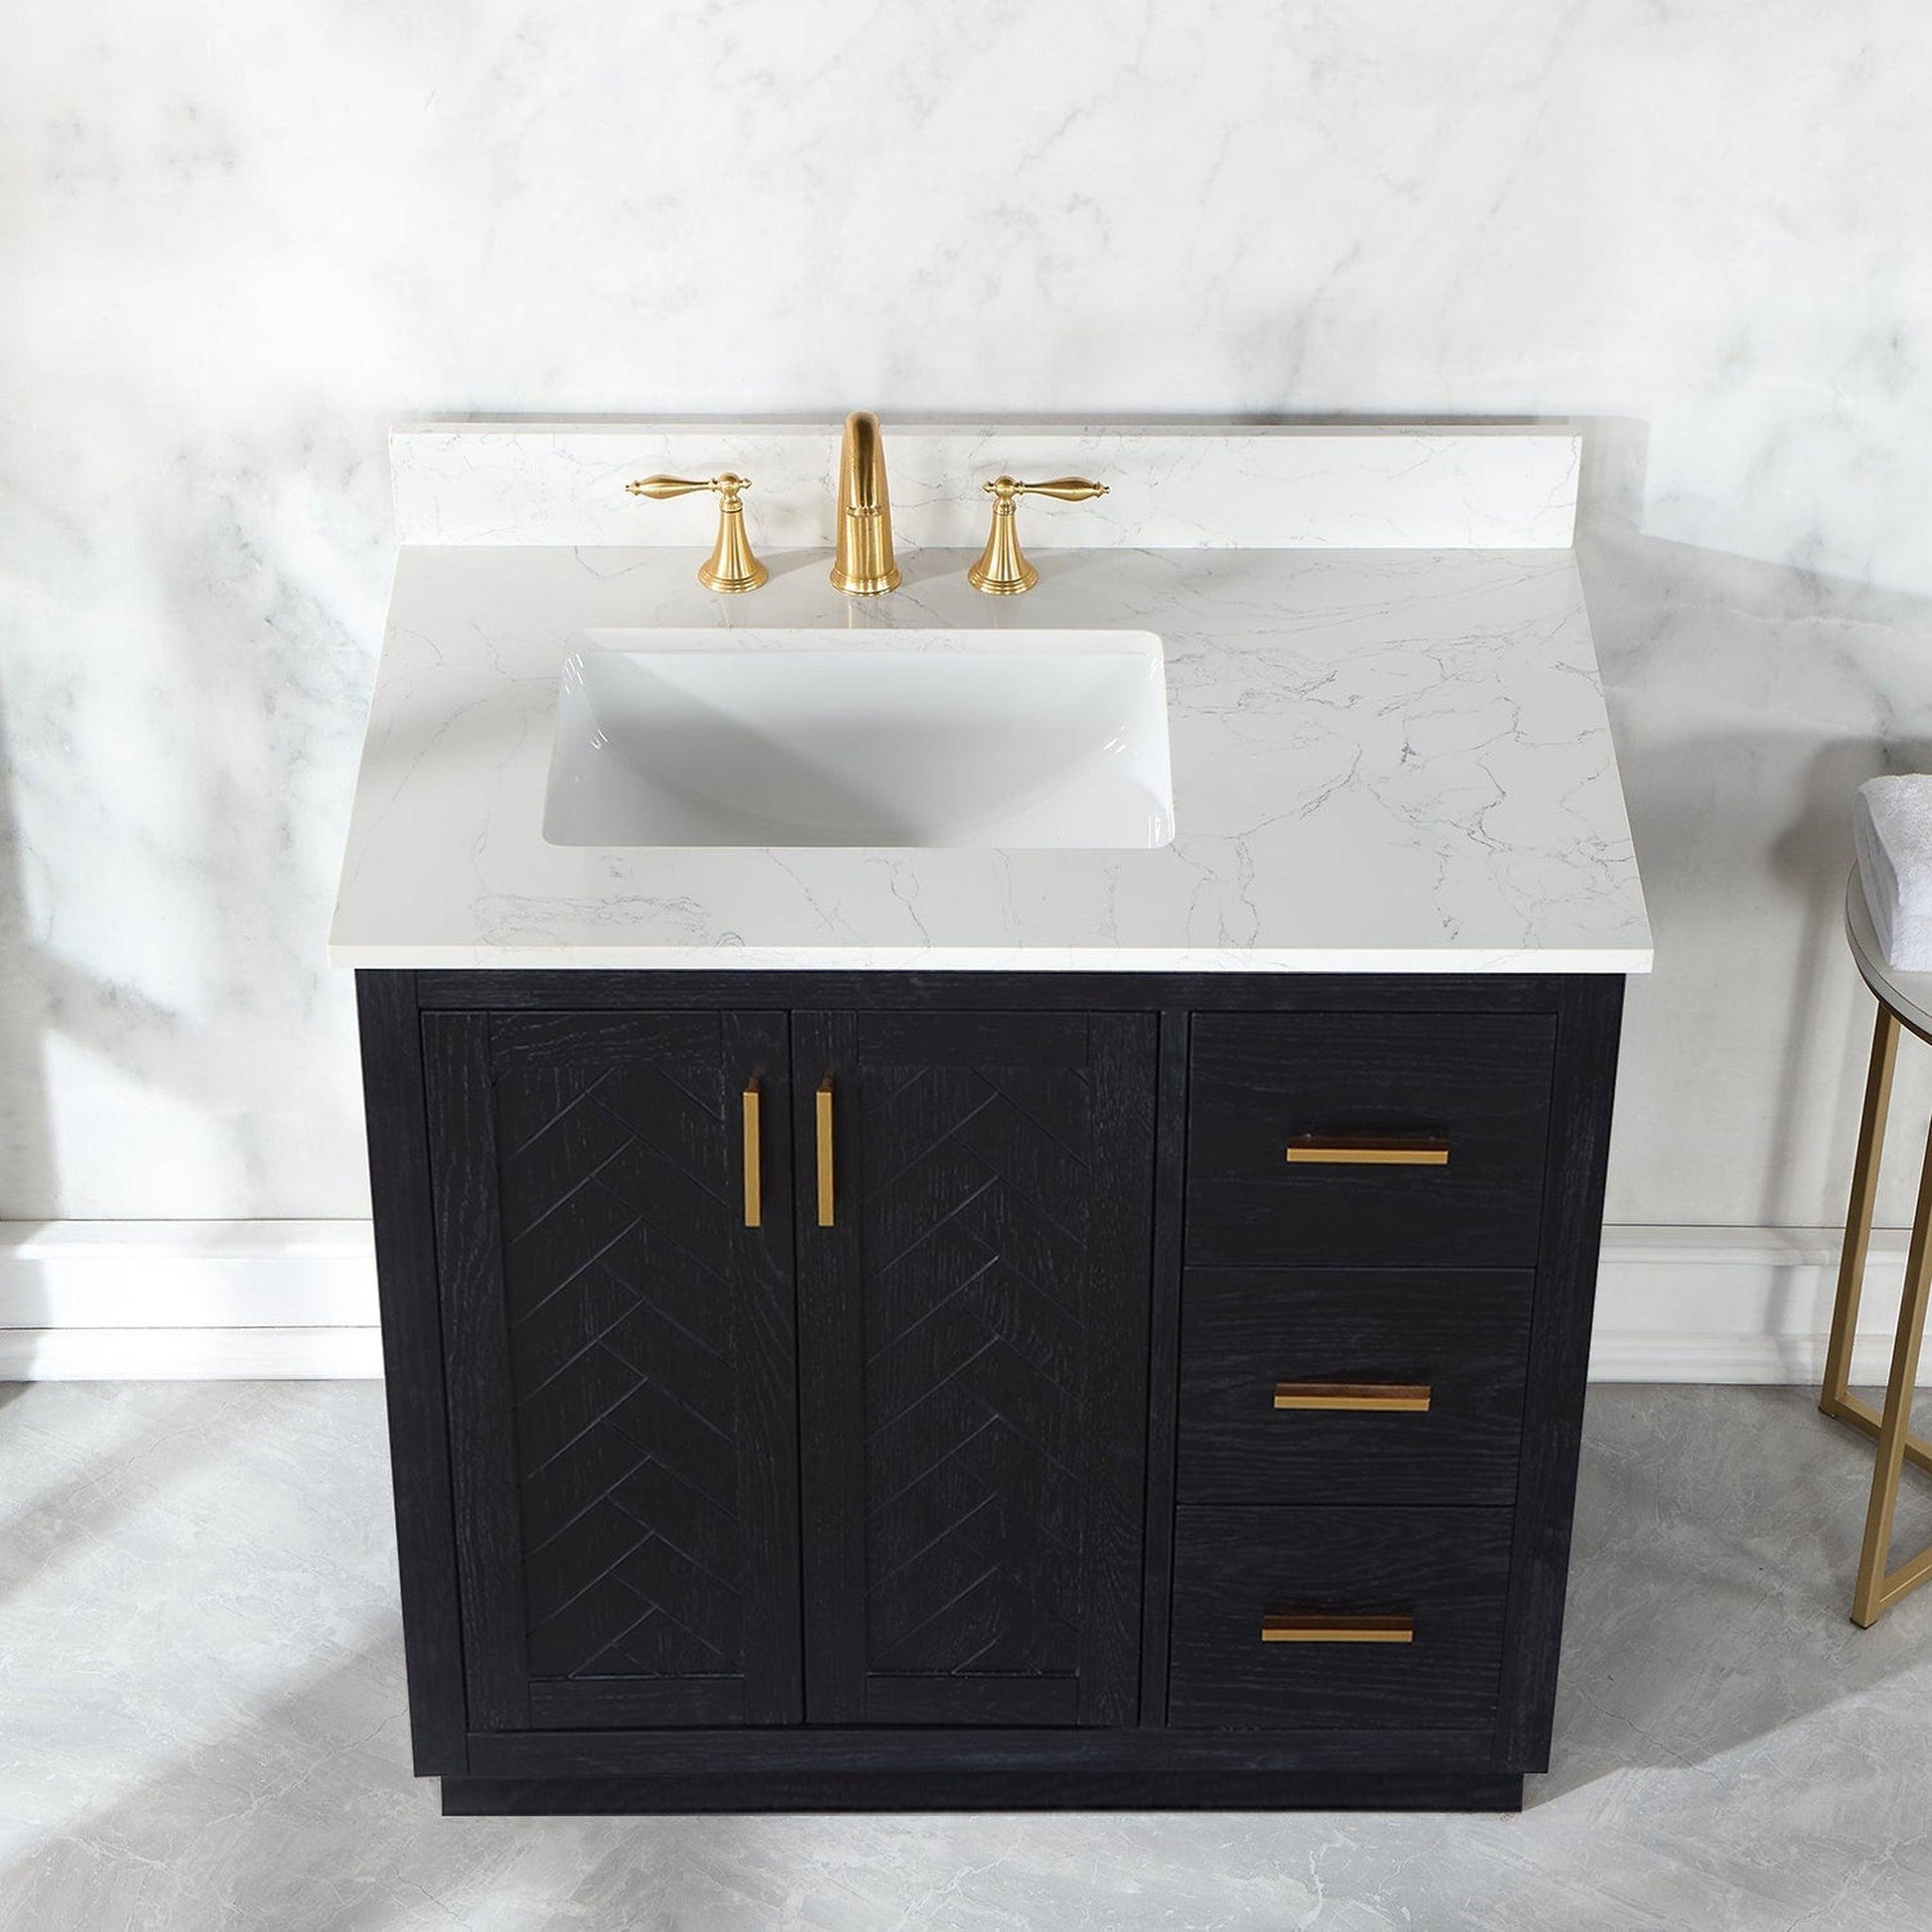 Altair Gazsi 36" Black Oak Freestanding Single Bathroom Vanity Set With Elegant Composite Grain White Stone Top, Rectangular Undermount Ceramic Sink, Overflow, and Backsplash